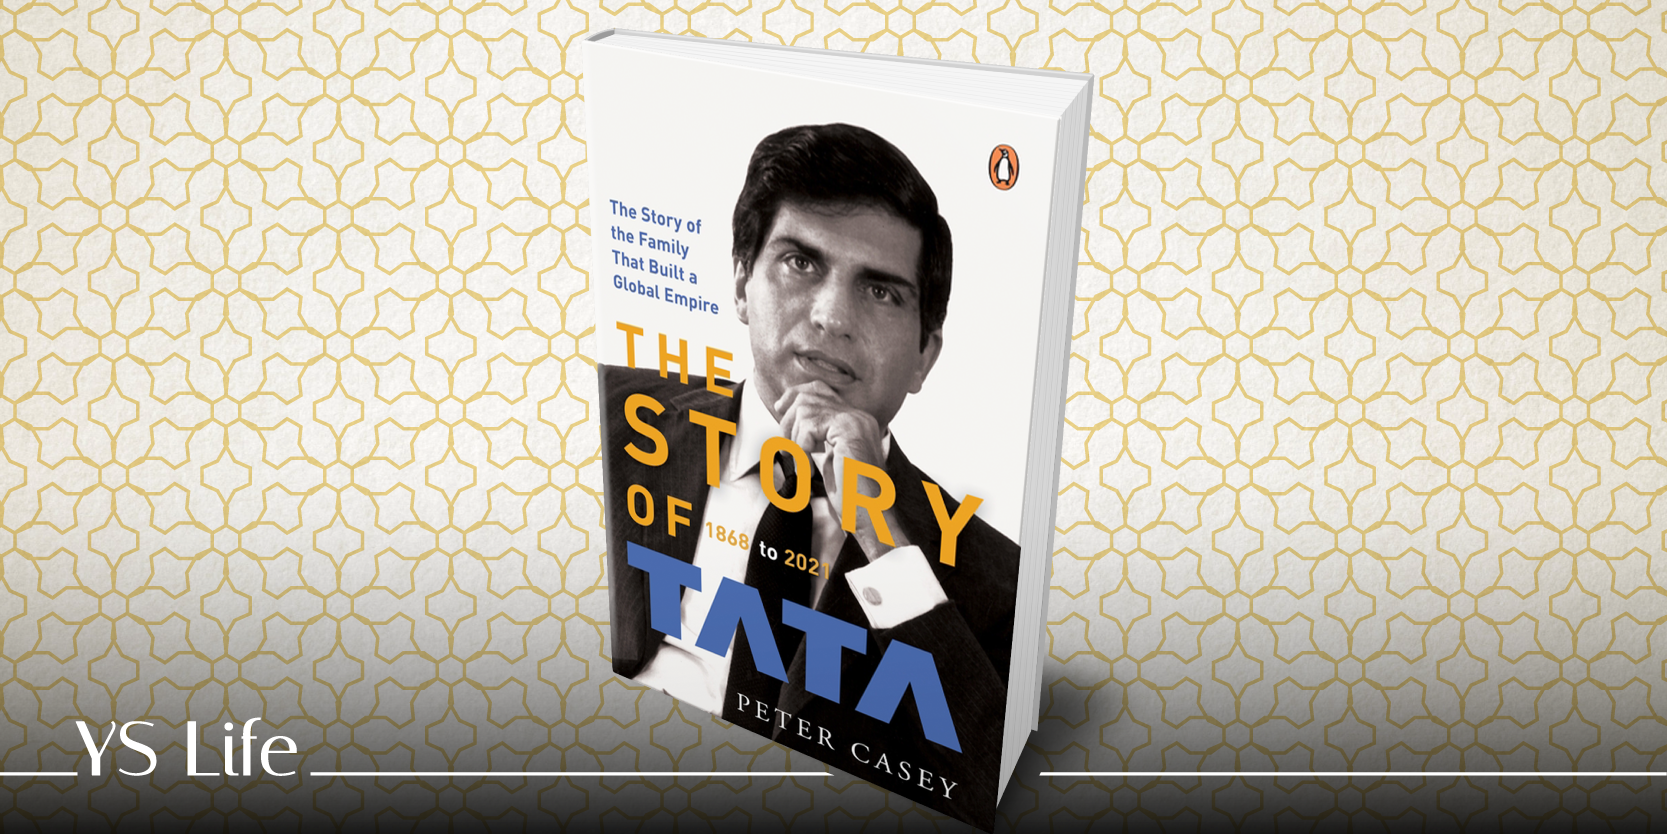 The story of Tata: Peter Casey on group’s philanthropy, Ratan Tata vs Cyrus Mistry affair